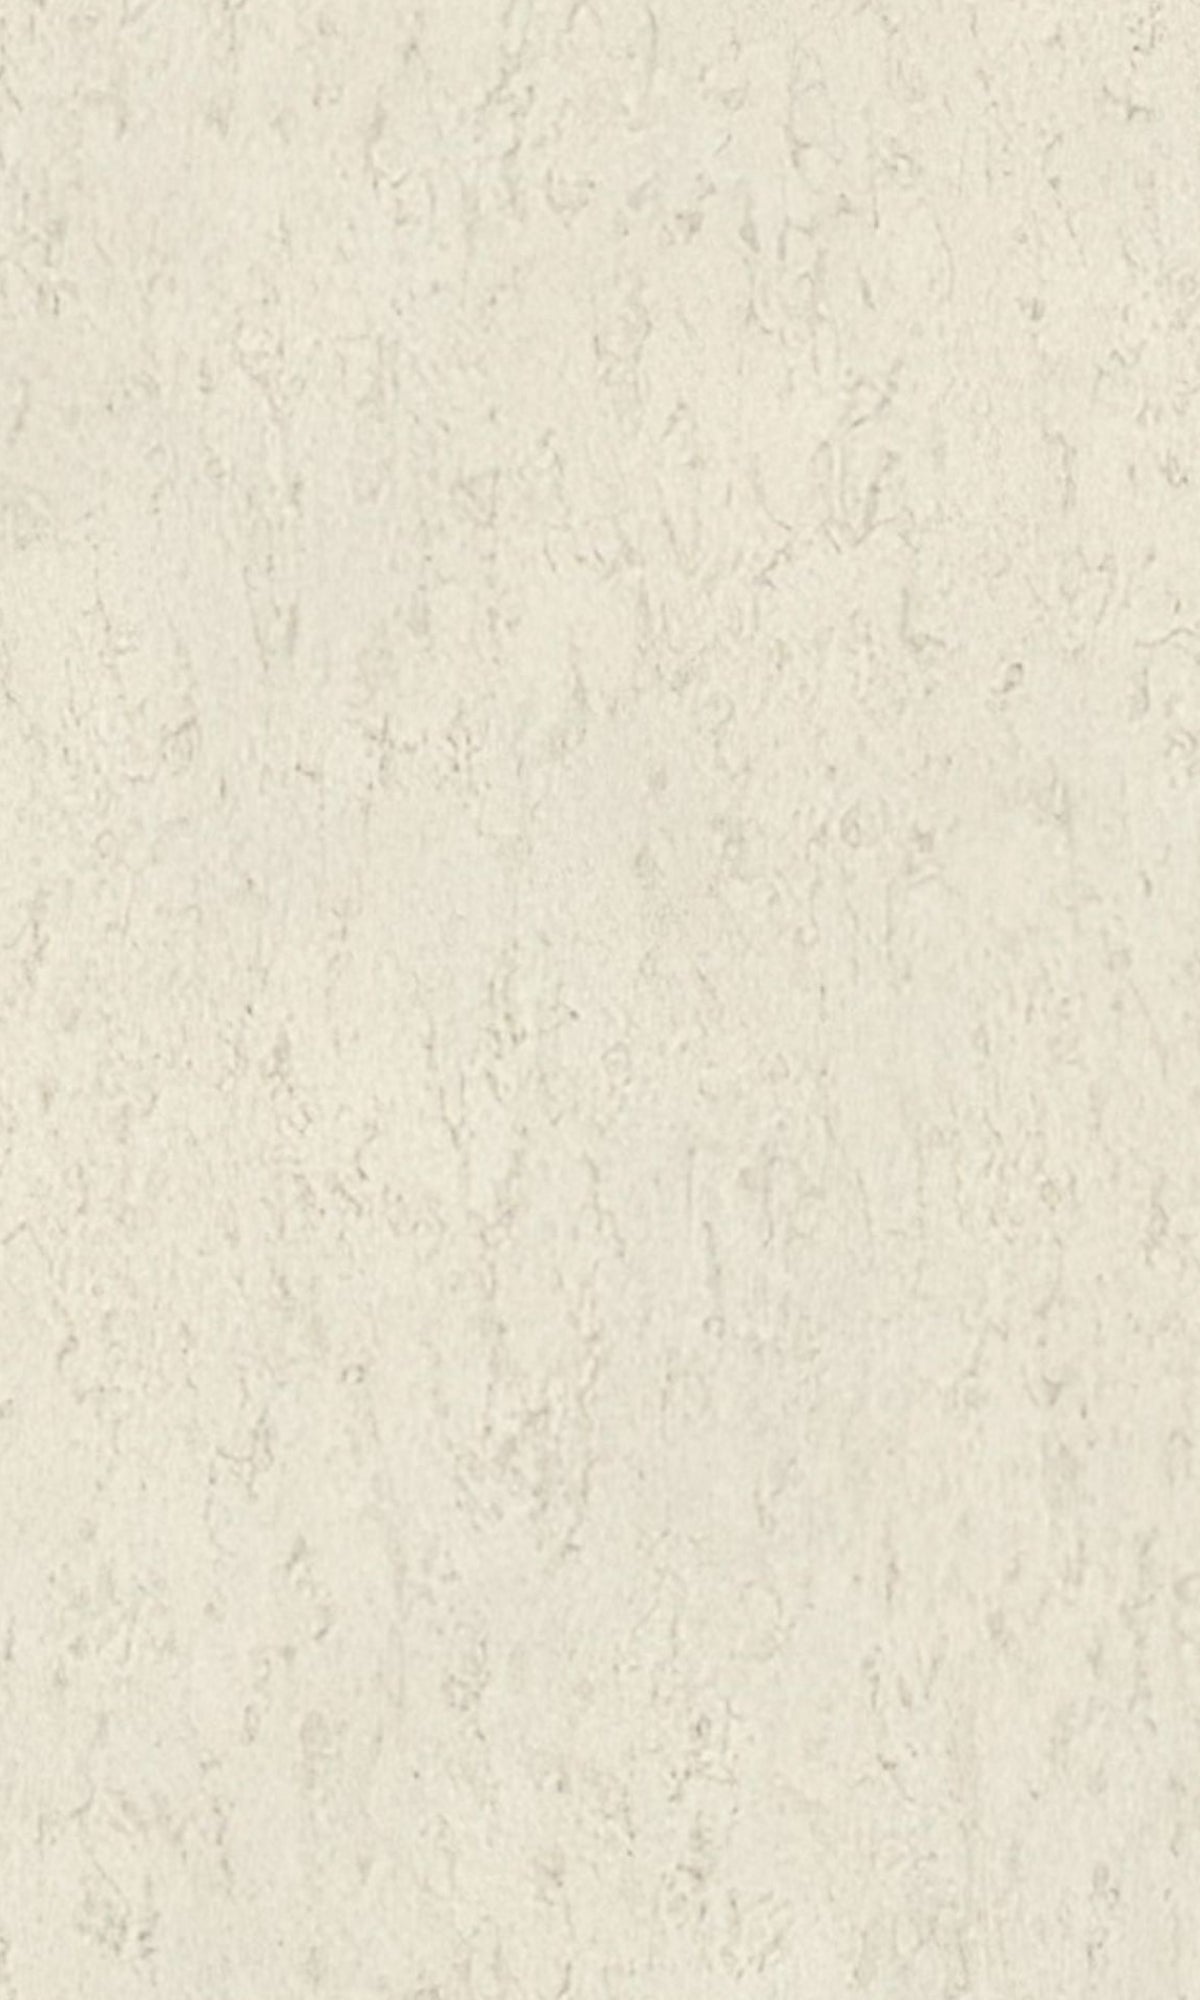 River Rock Marble Like Textured Vinyl Commercial Wallpaper C7563